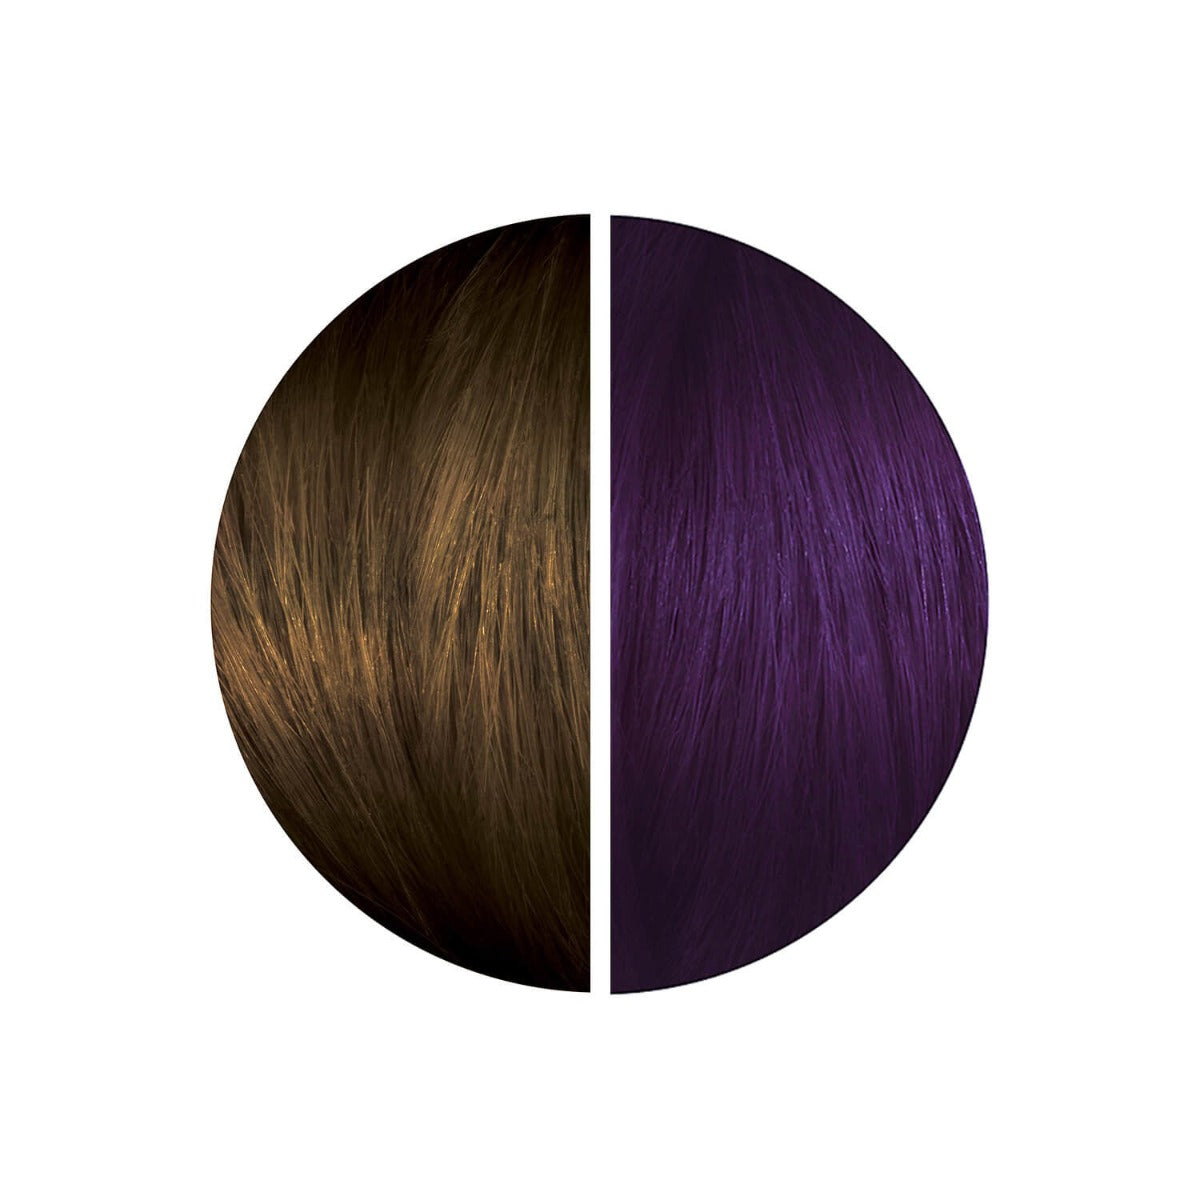 Swatch of Splat Hair Color's Melts Purple Plum Hair Dye